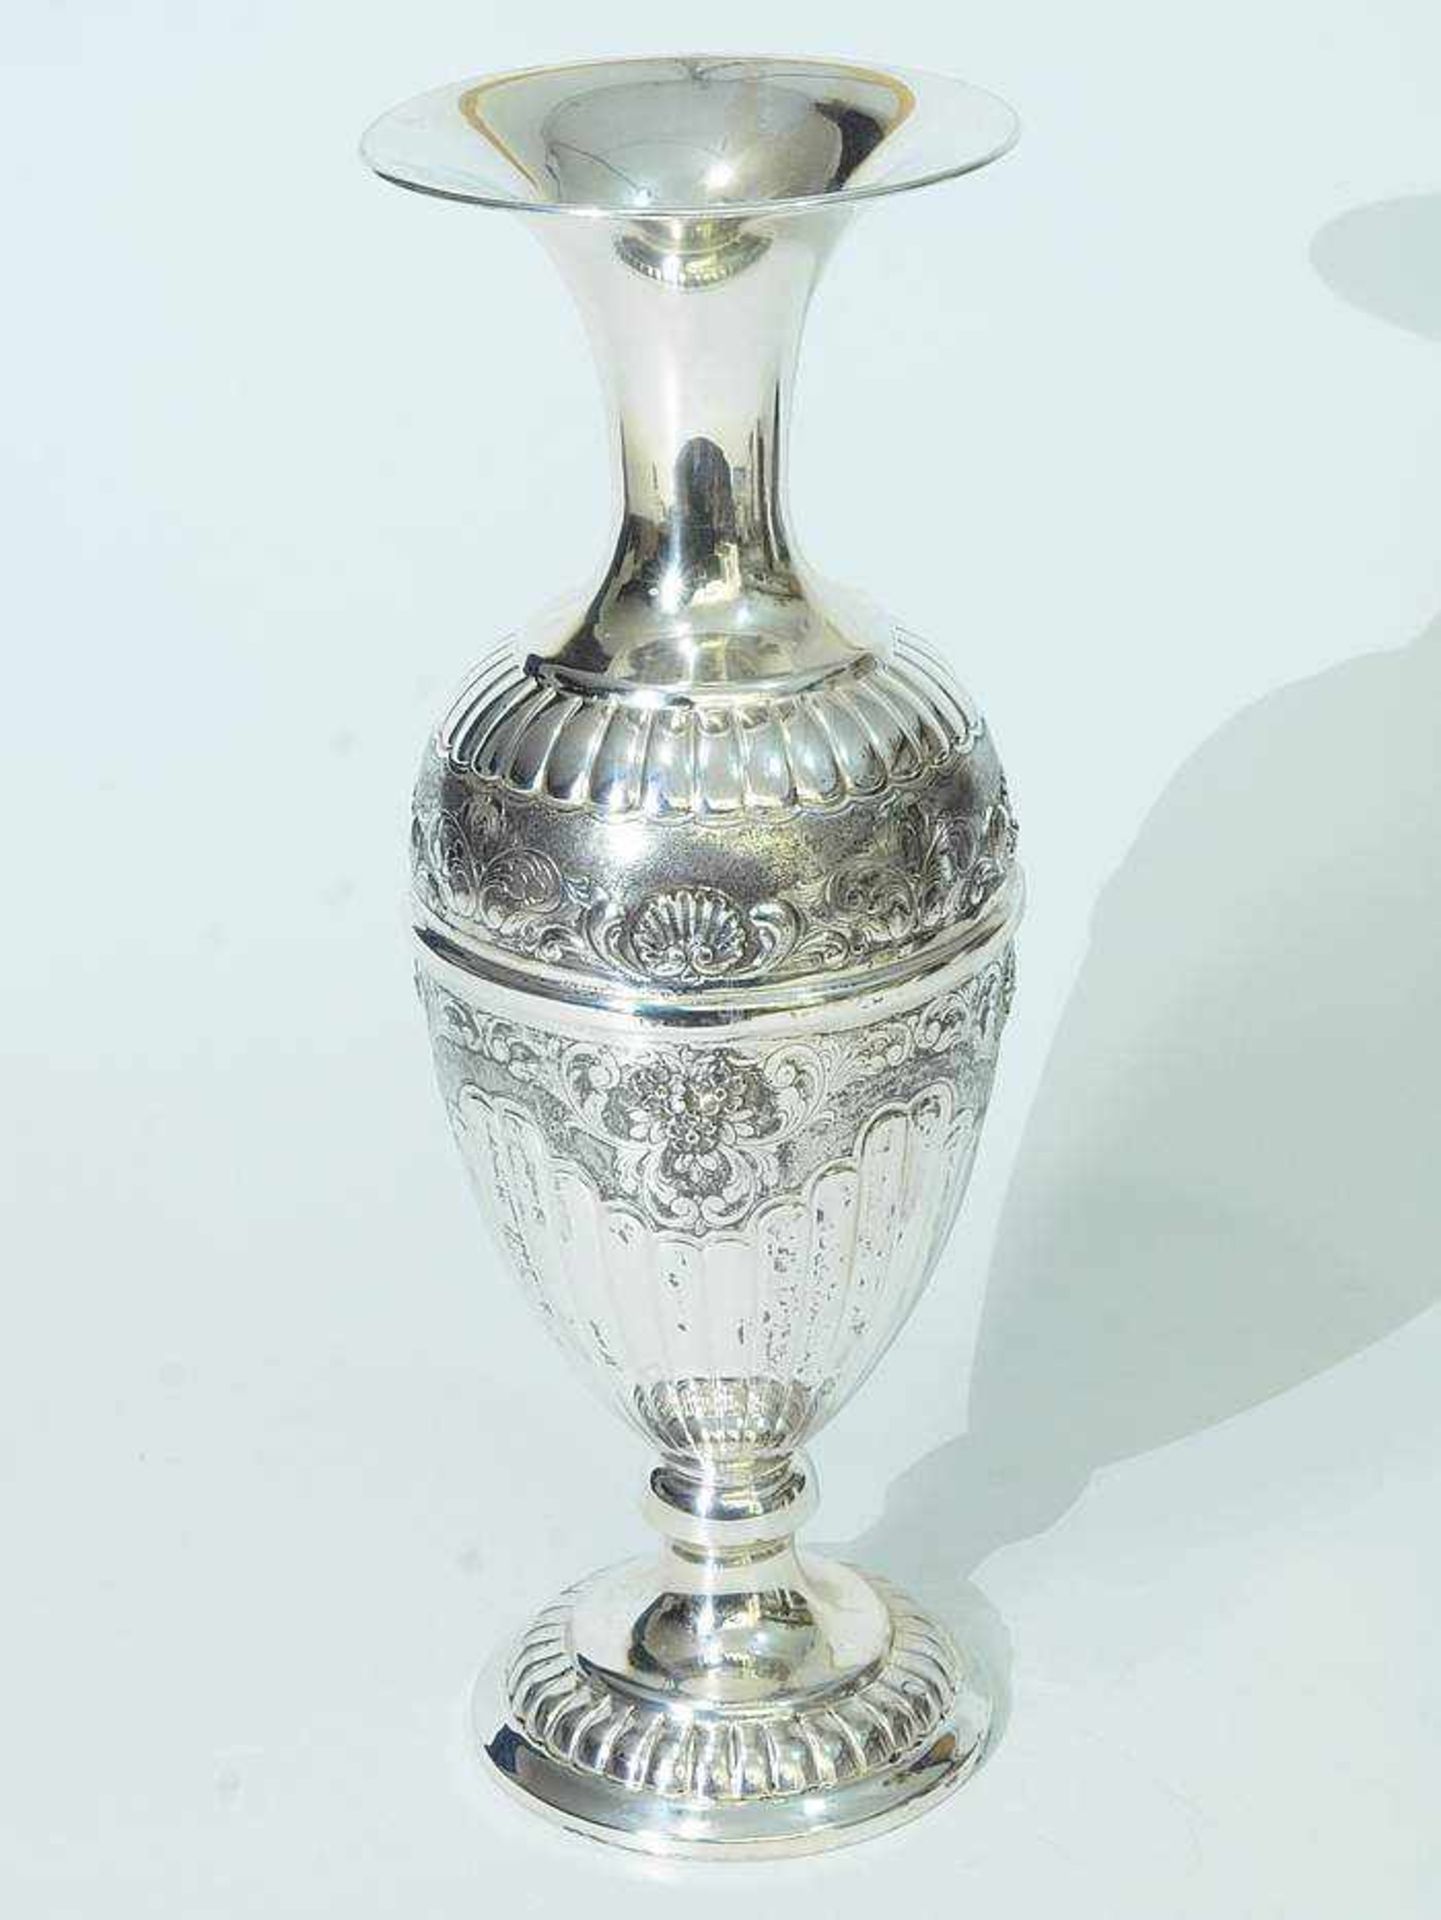 Große Vase. Große Vase. 20. Jahrhundert. Punze 800, Handarbeit. Ovoide repräsentative Form mit